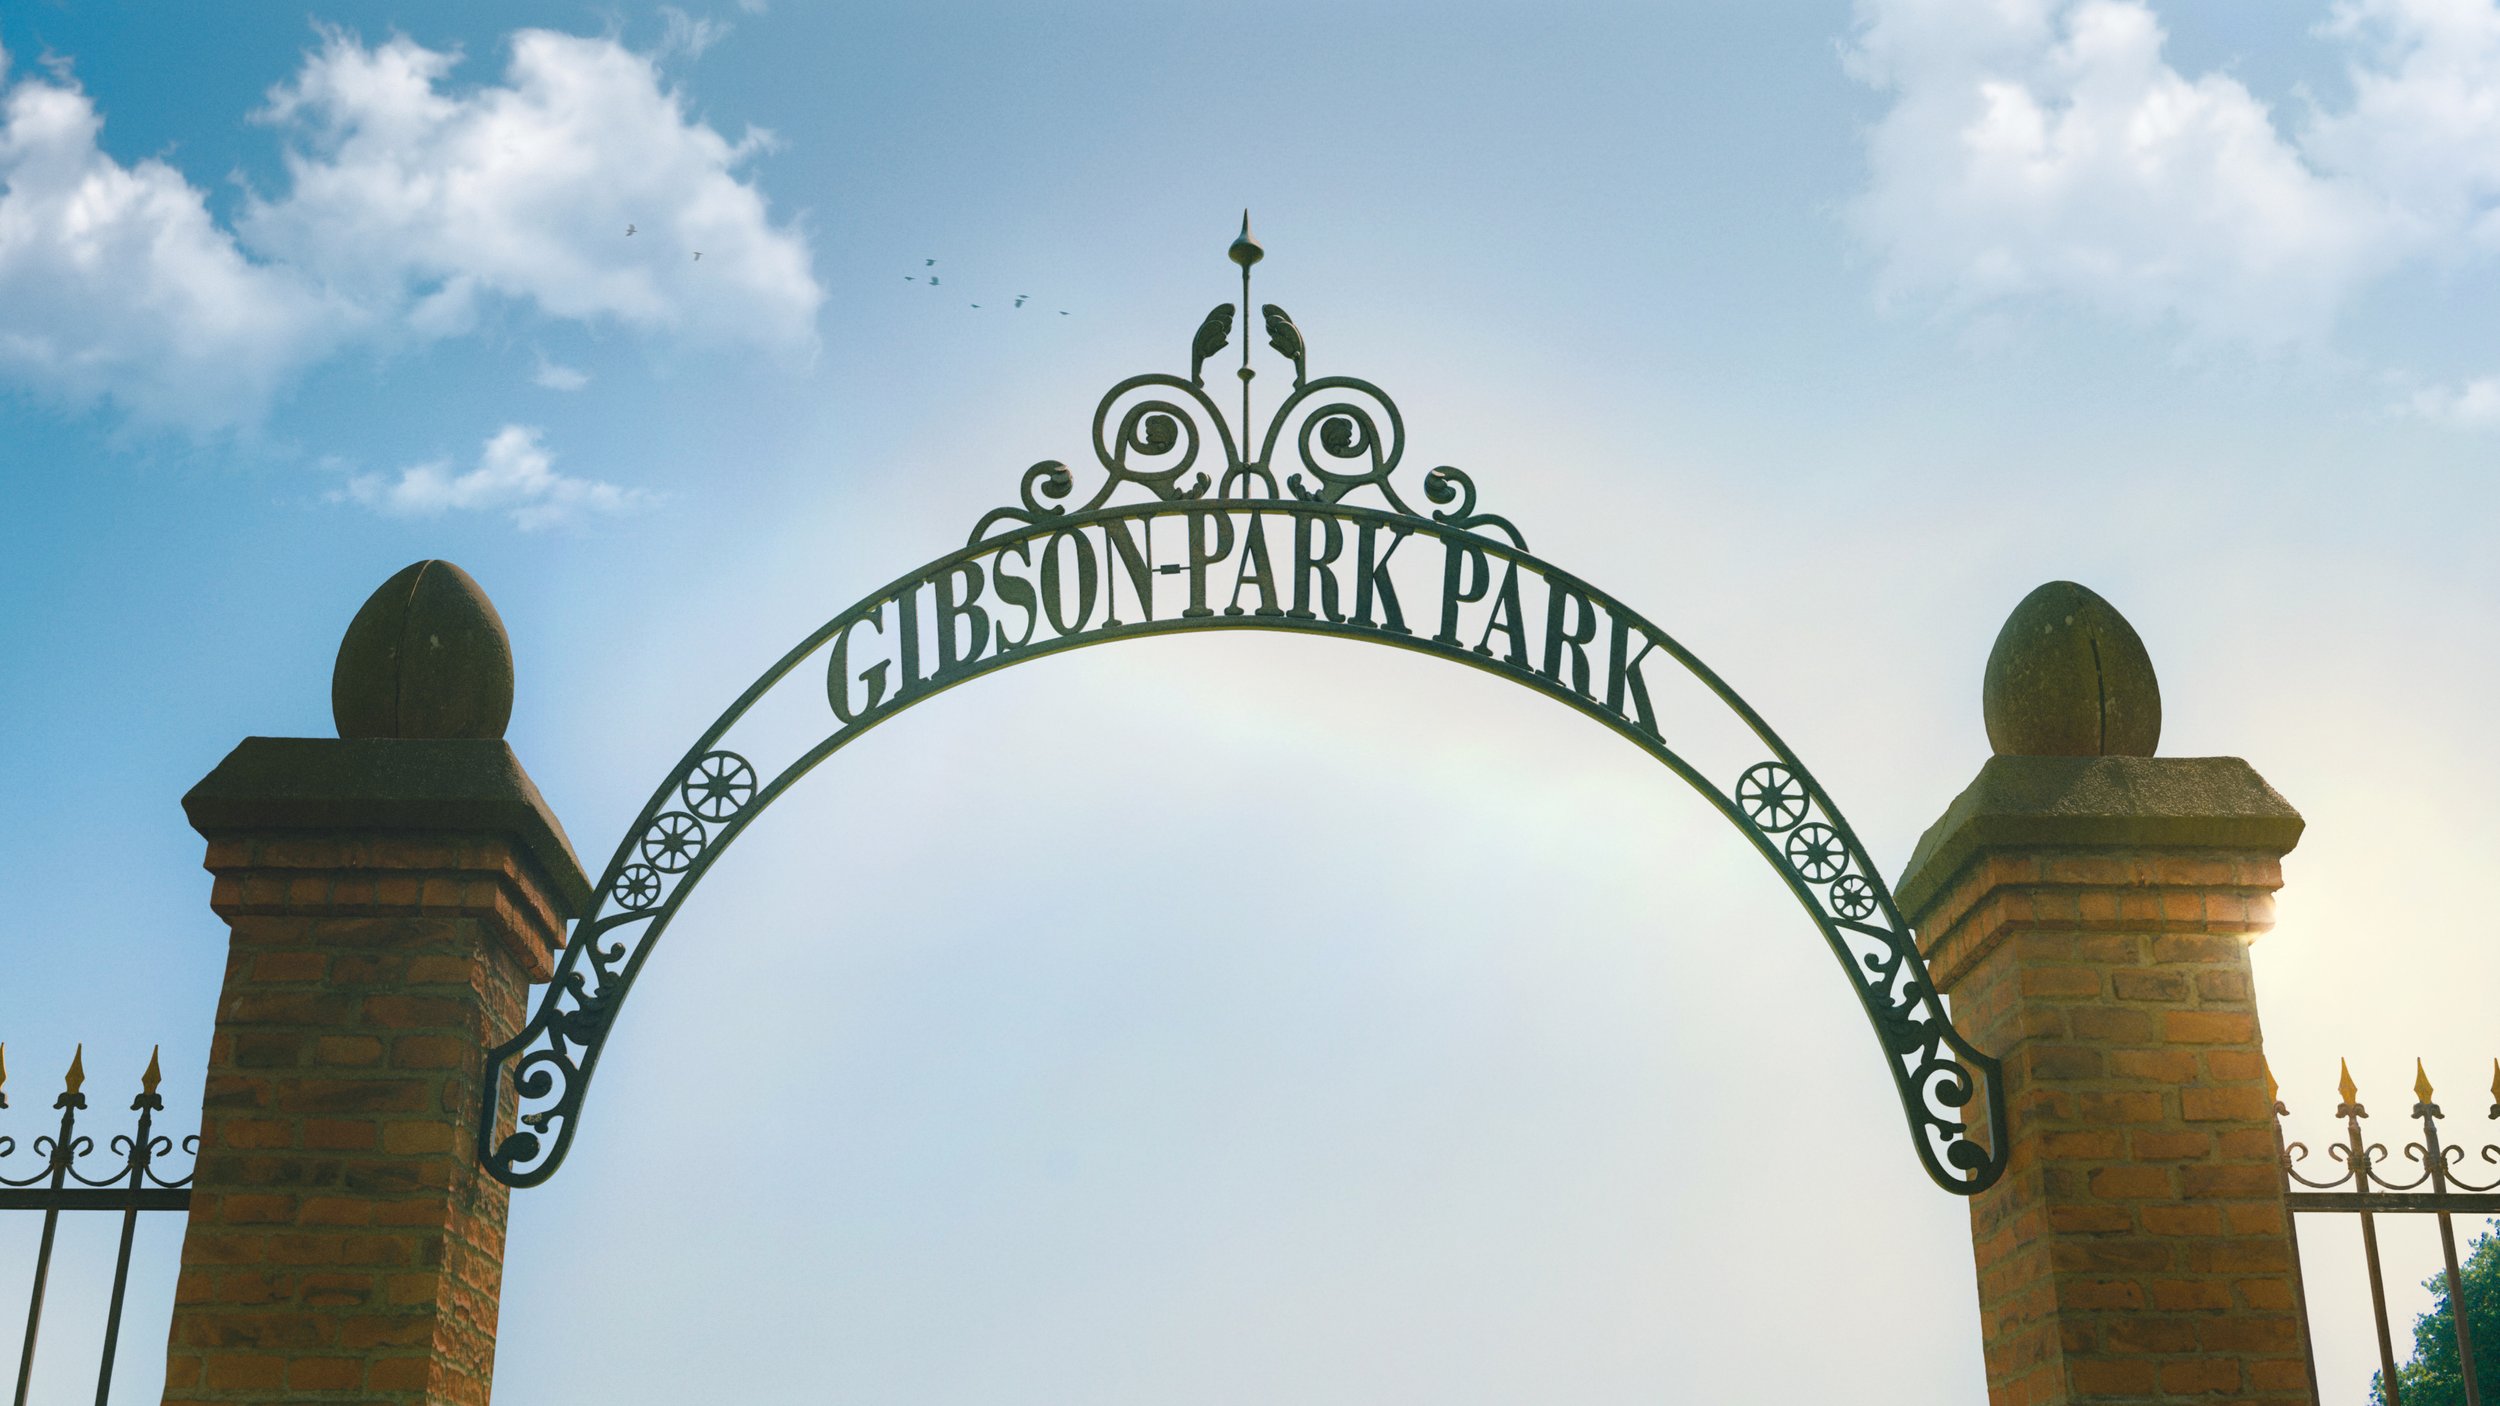 Energia - Gibson Park Park.jpg